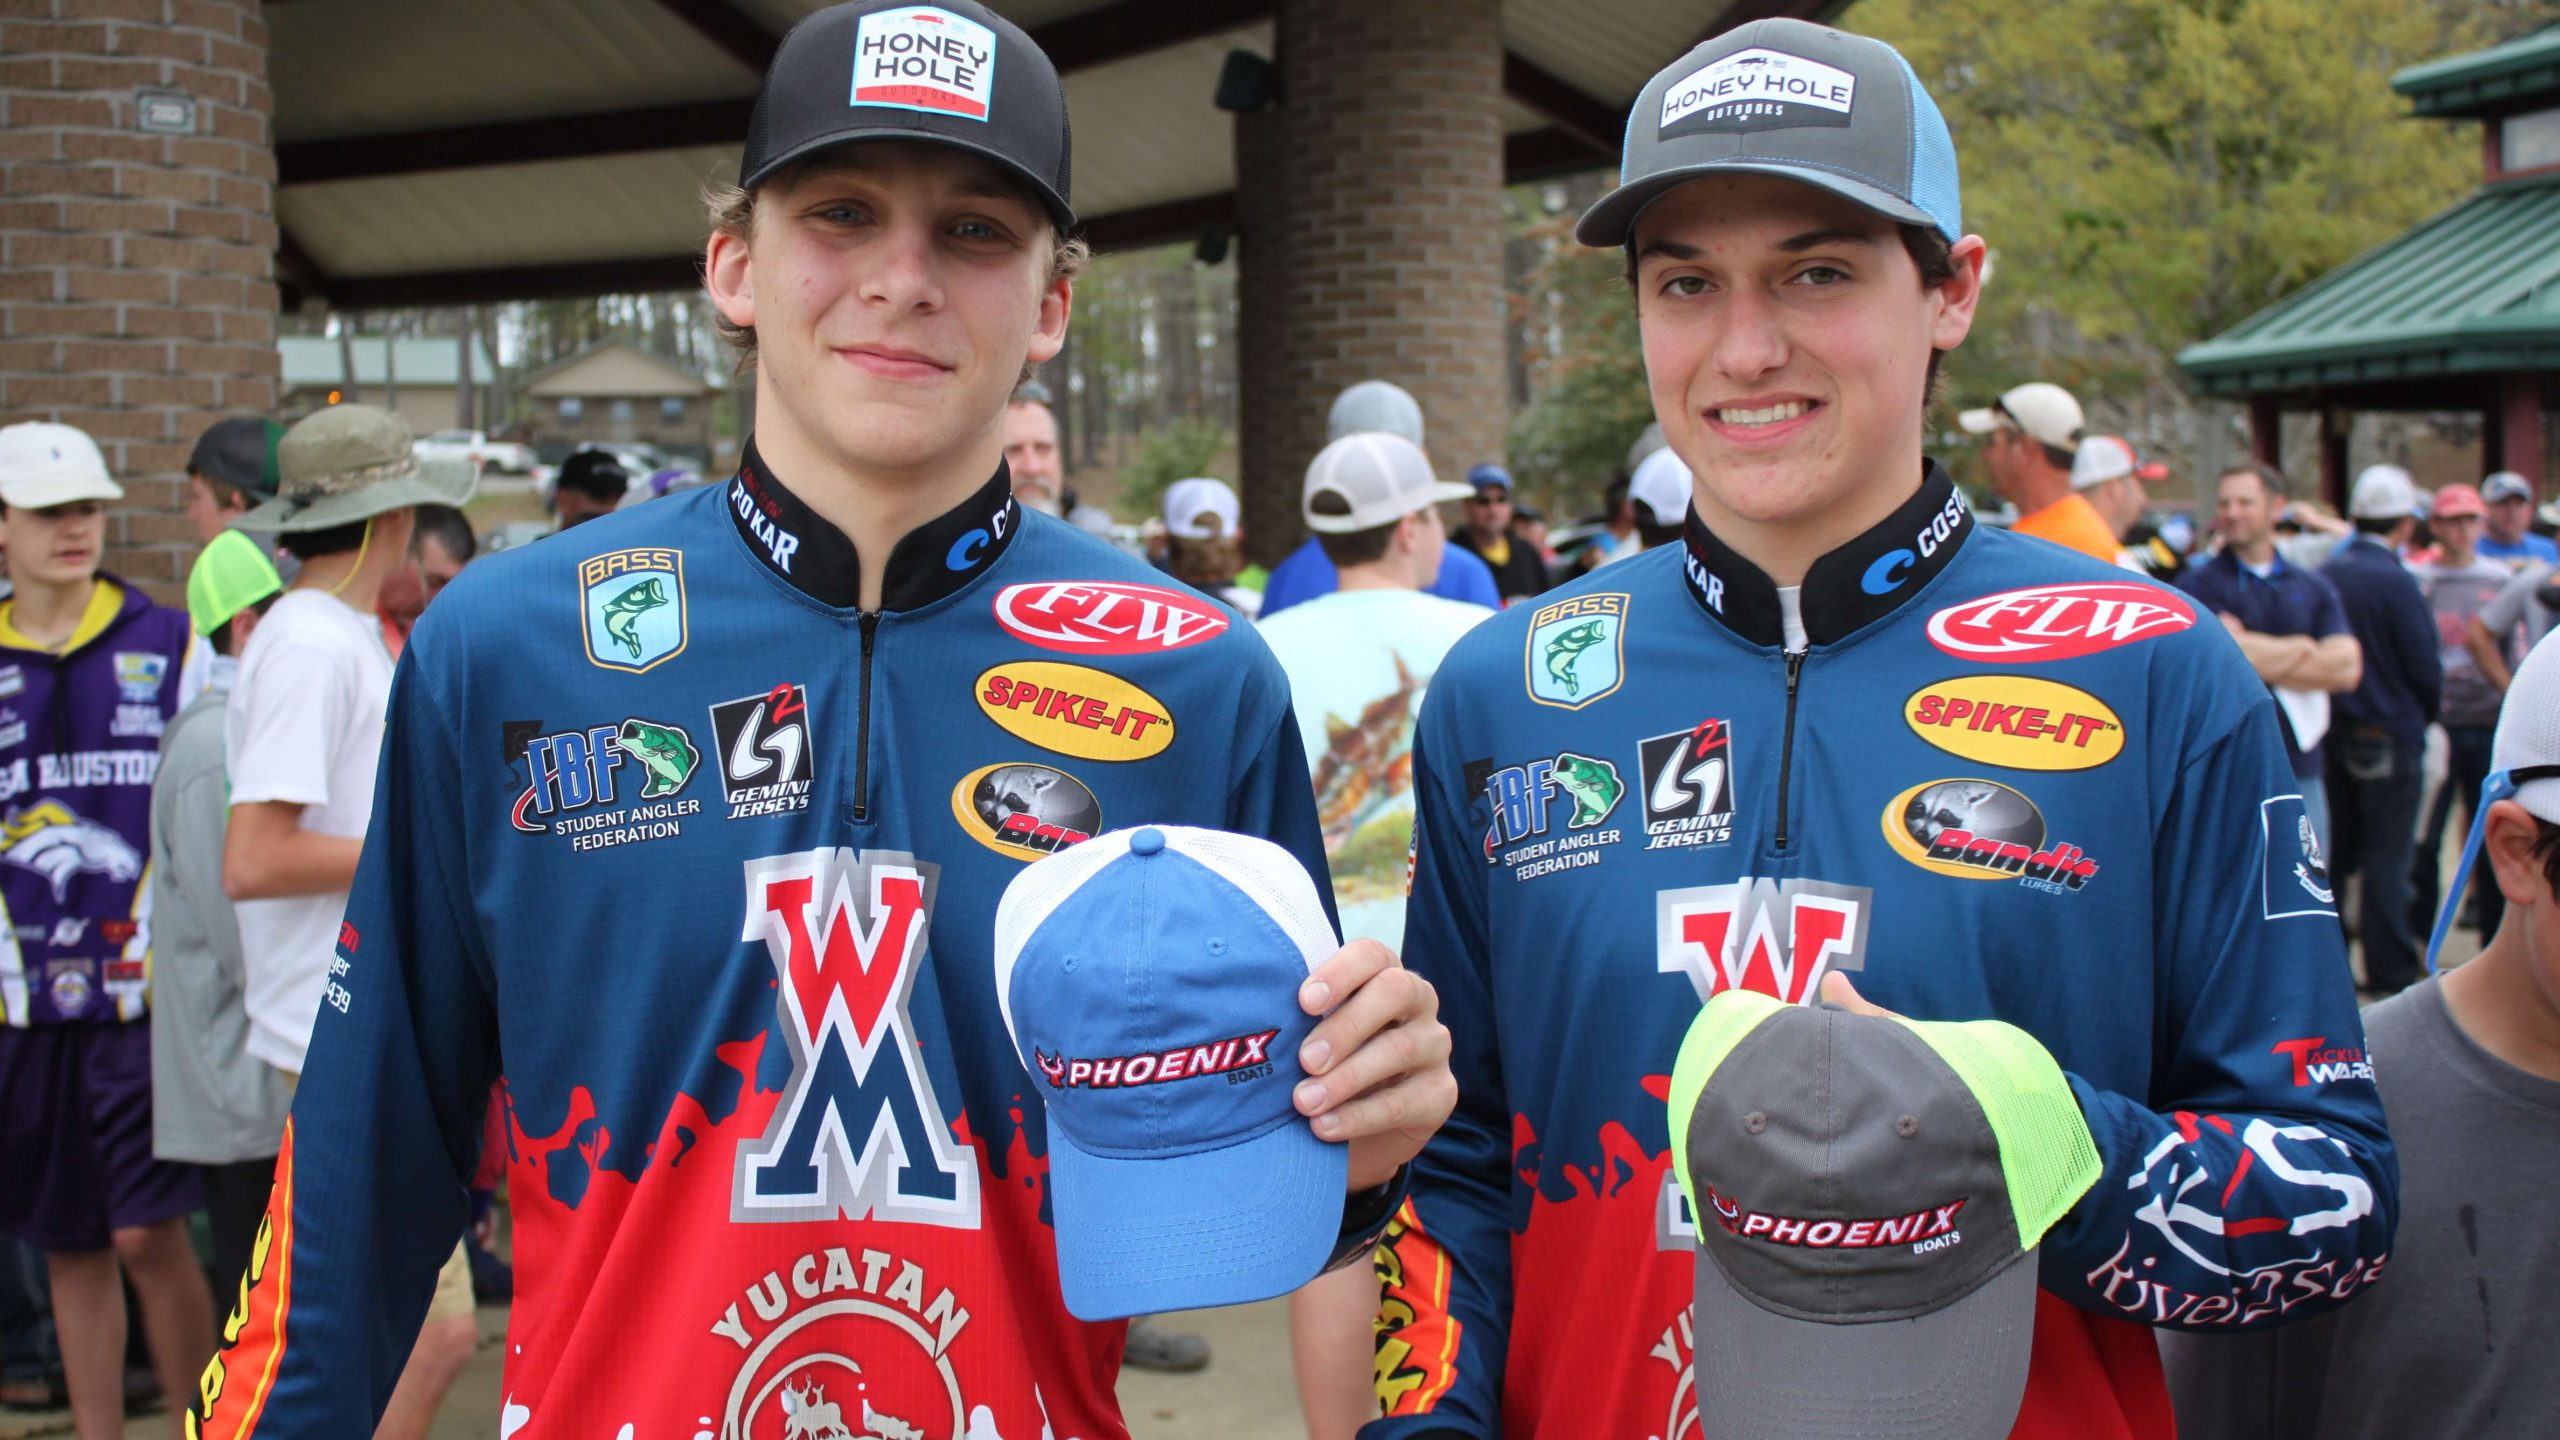 West Monroe (La.) High School's Jacob Pihl and Will Lambert
show off their new Phoenix Boats hats.